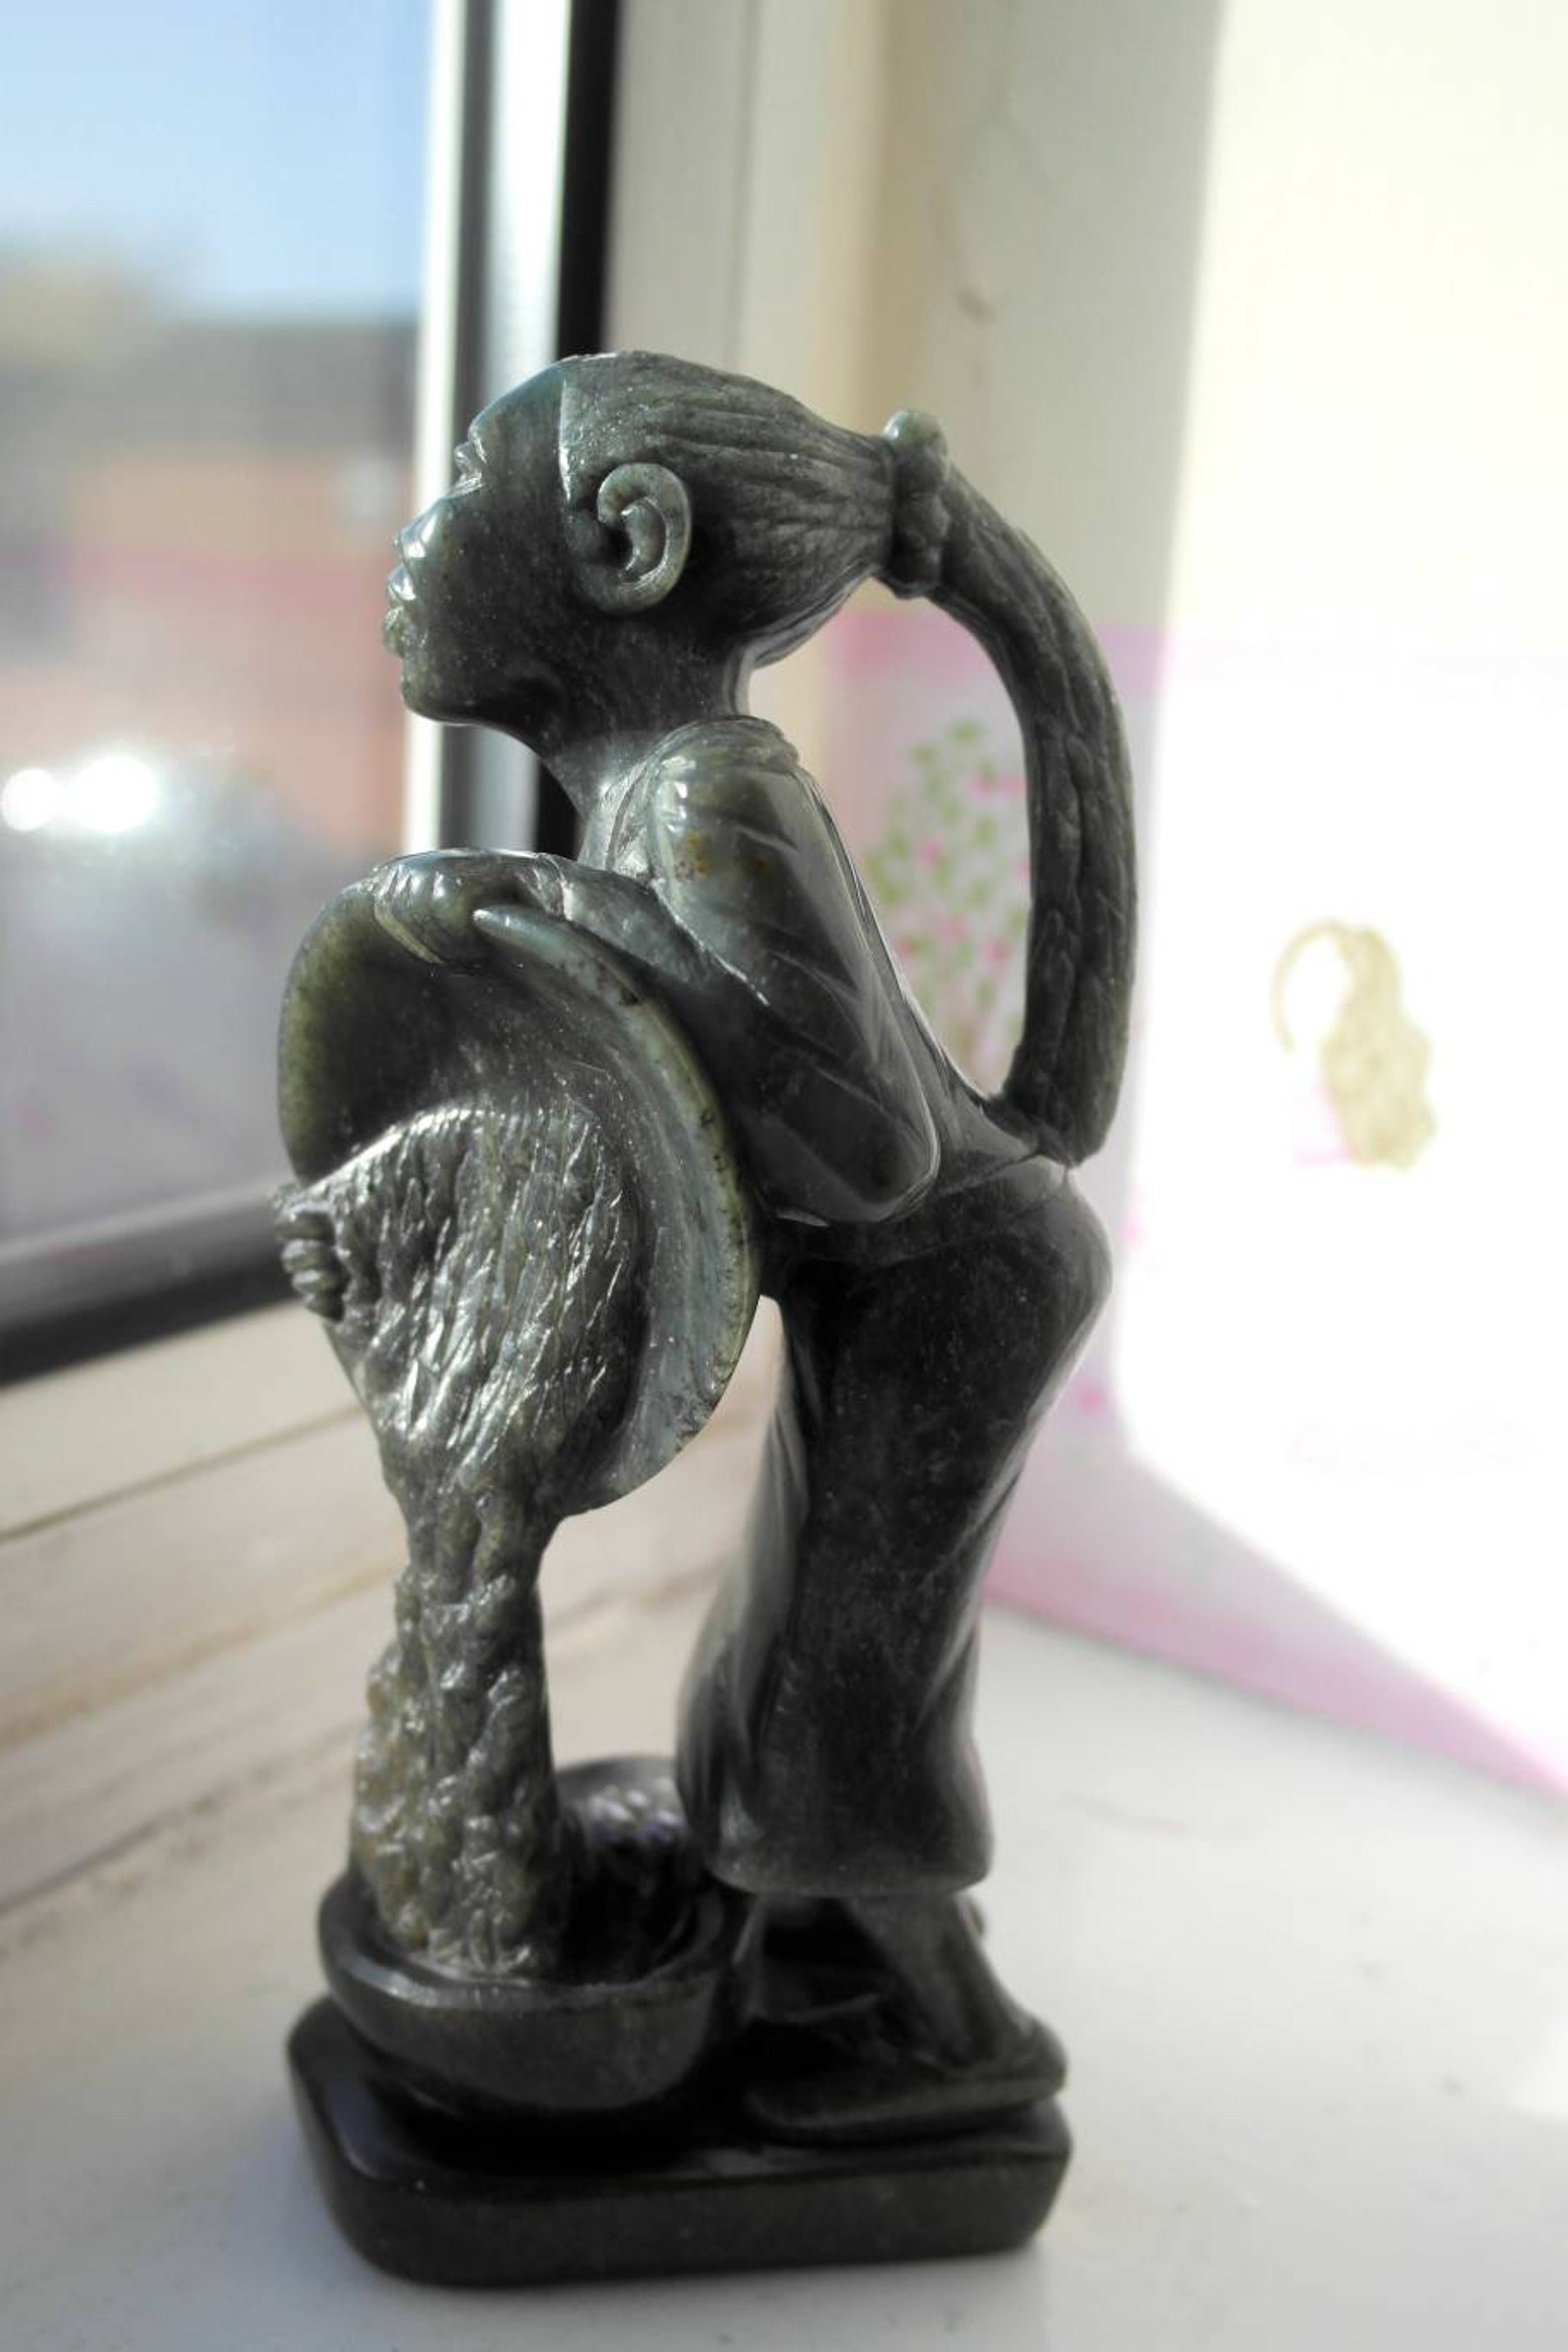 Winnowing Lady Serpentine Sculpture Shona sculpture Stone | Etsy